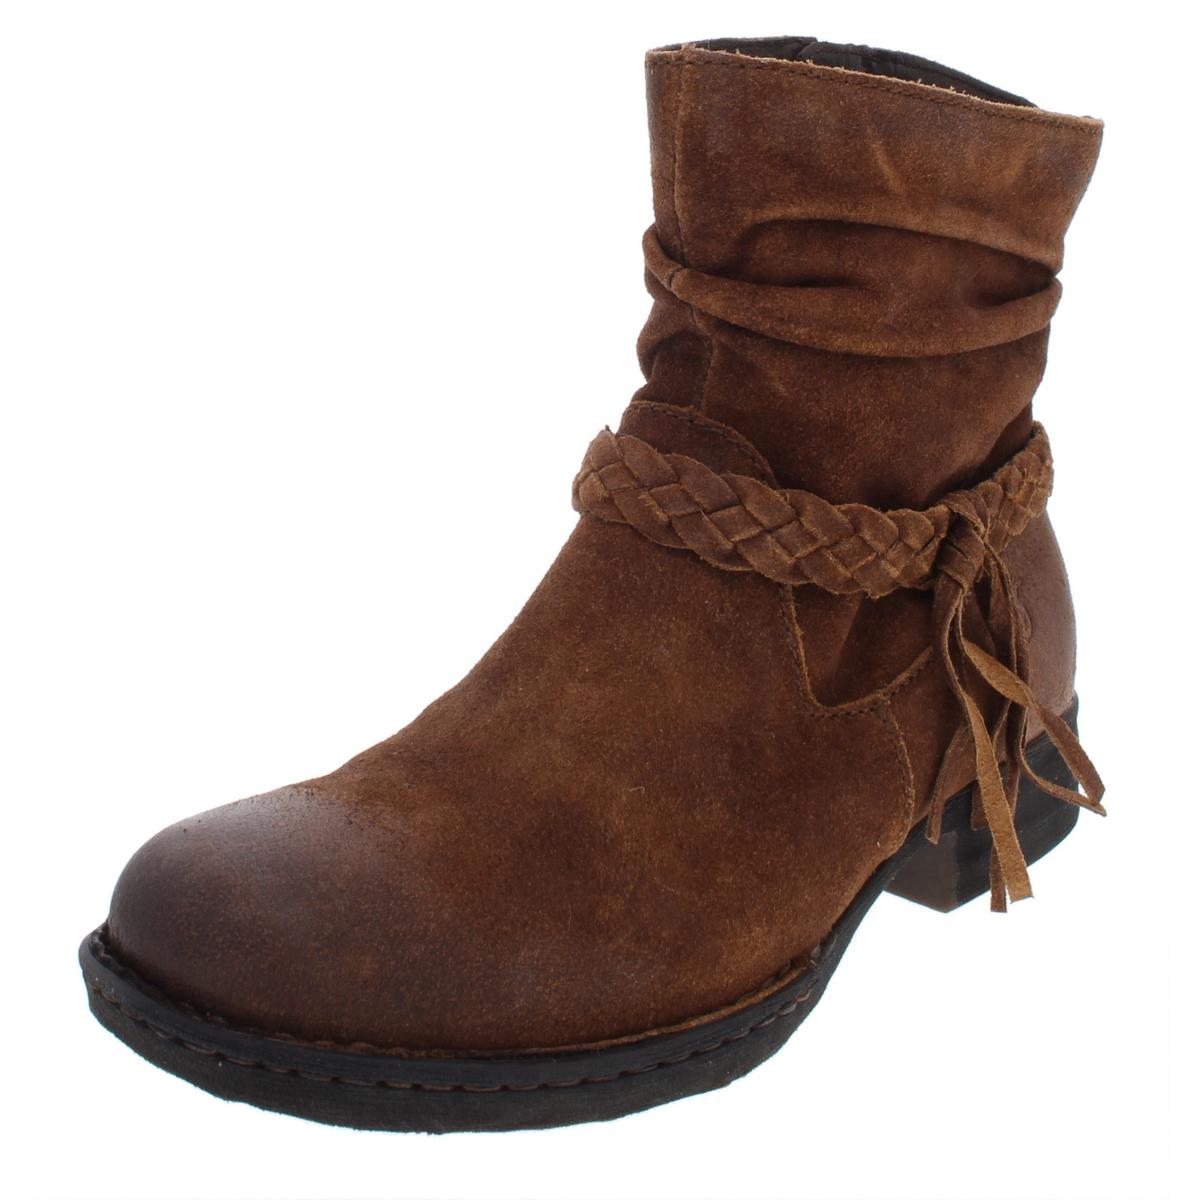 Born Womens Abernath Brown Suede Ankle Boots Shoes 6 Medium (B,M) BHFO ...